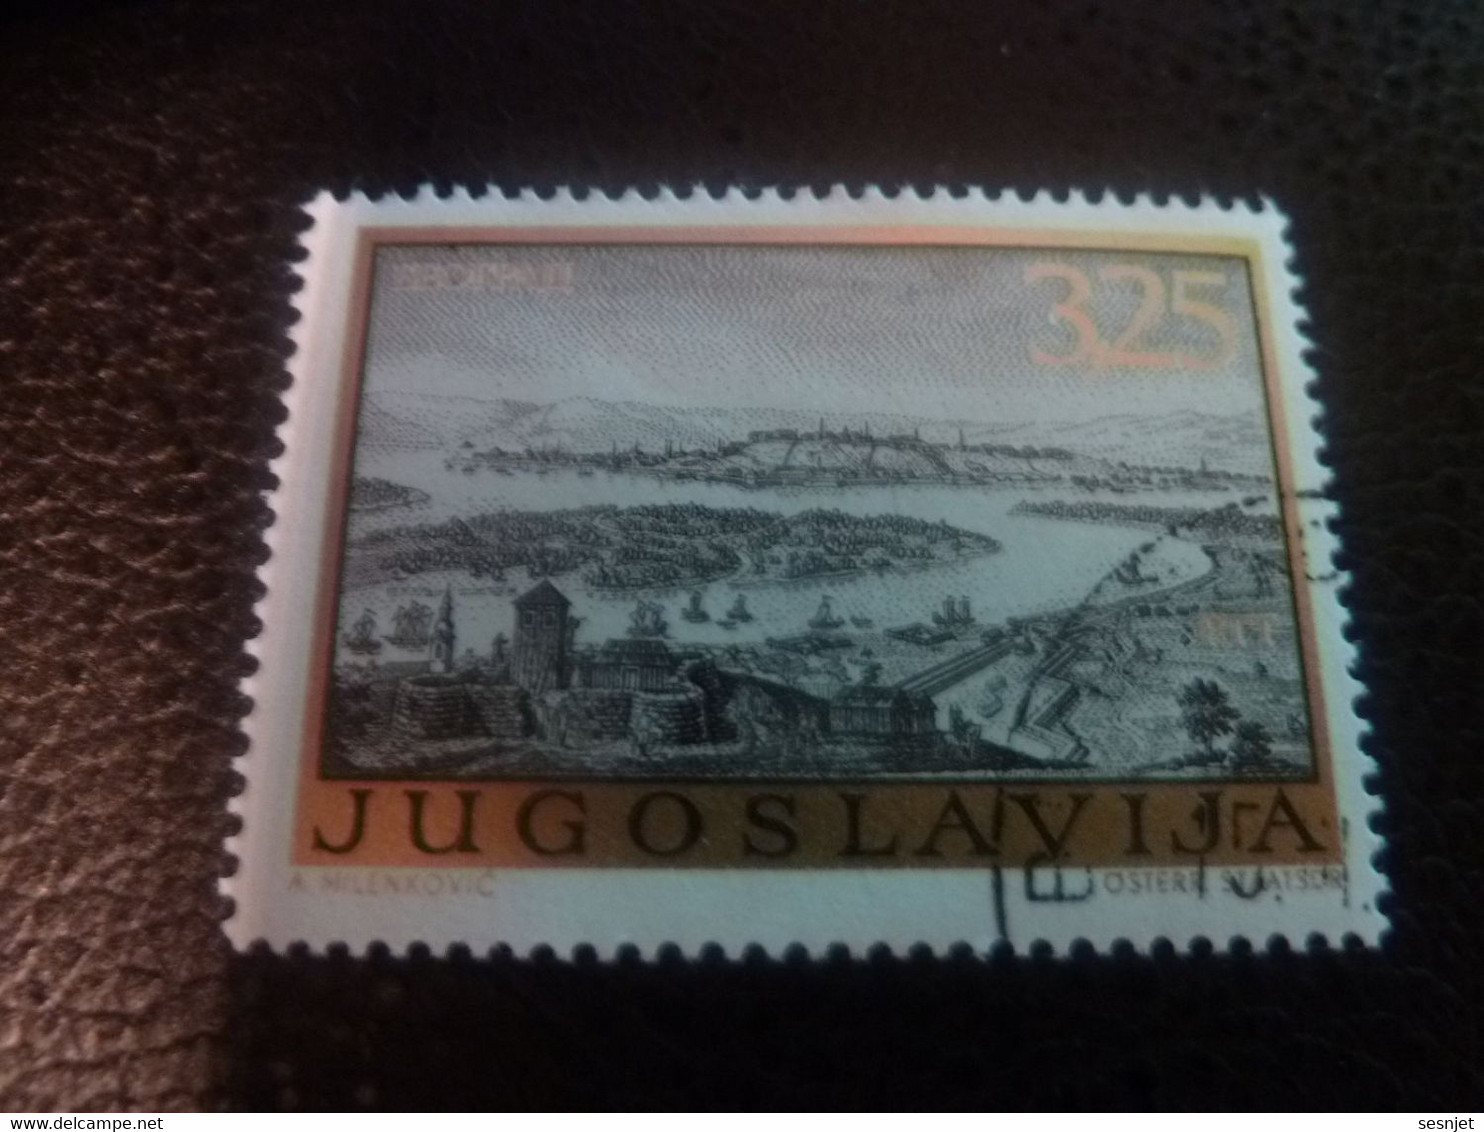 Ptt - Jugoslavija - Seotan - Val 3.25 - Polychrome - Oblitéré - - Used Stamps